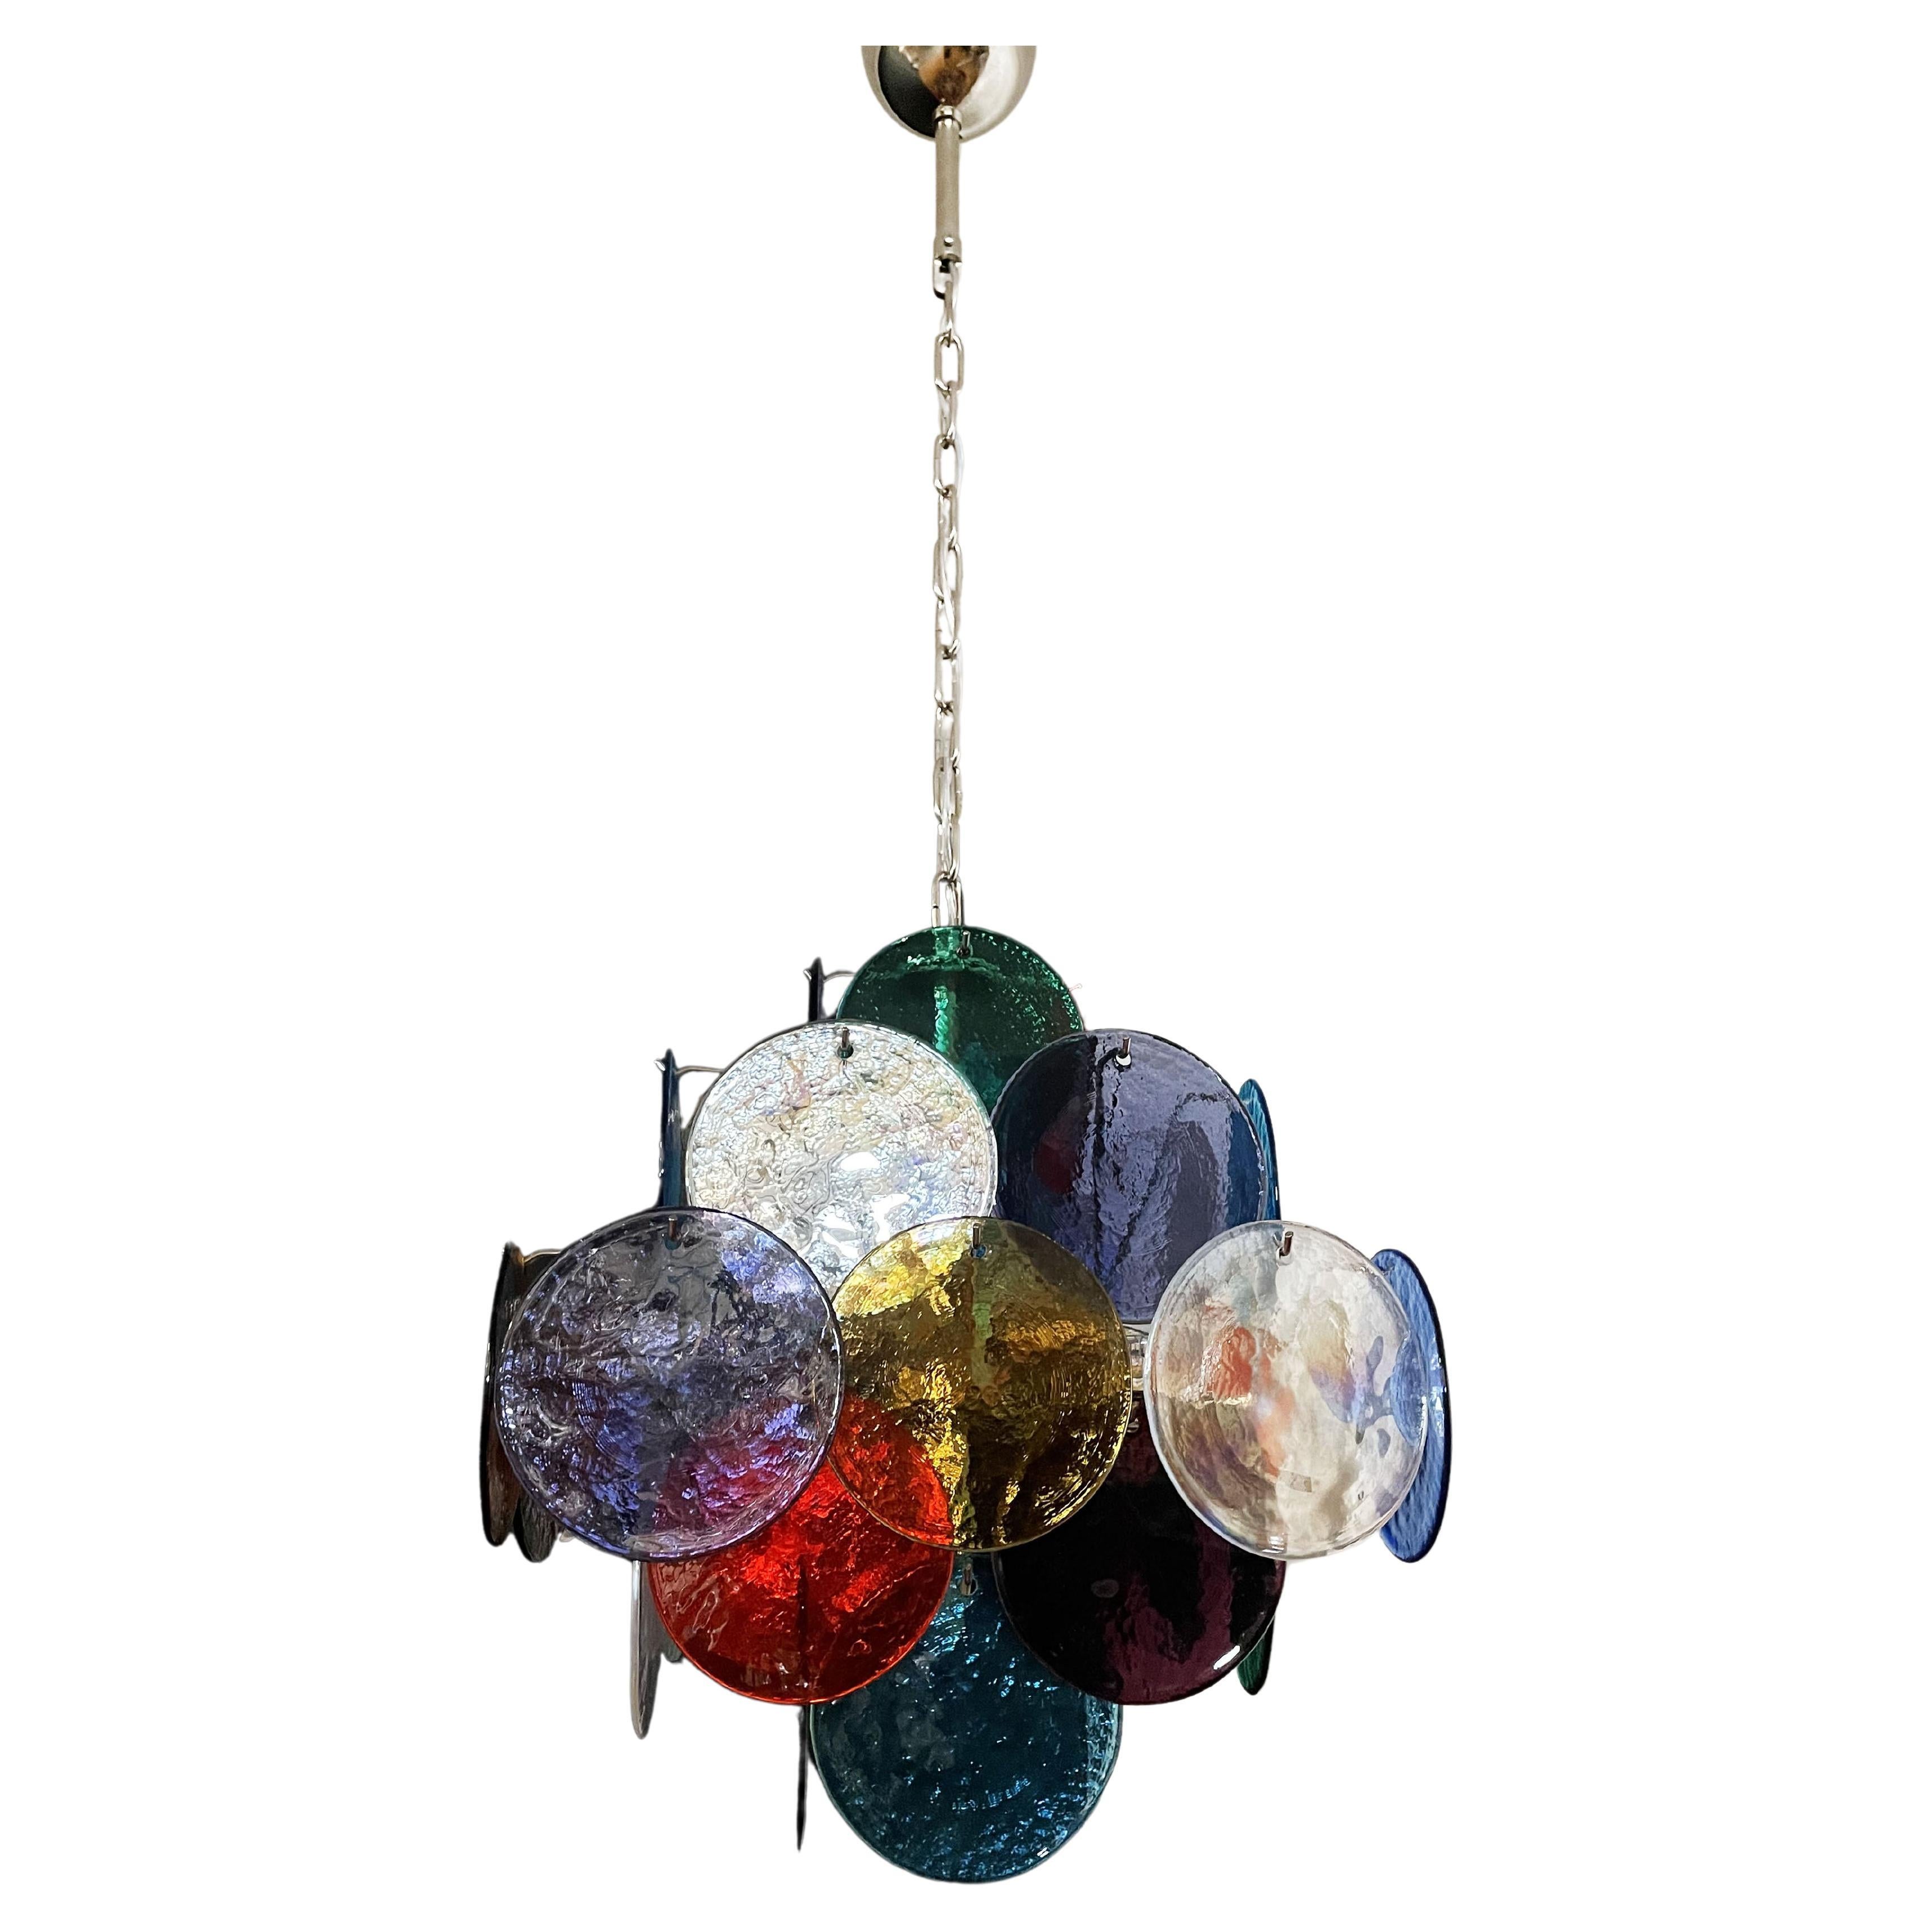 Vintage Italian Murano chandelier - 36 multicolored disks For Sale